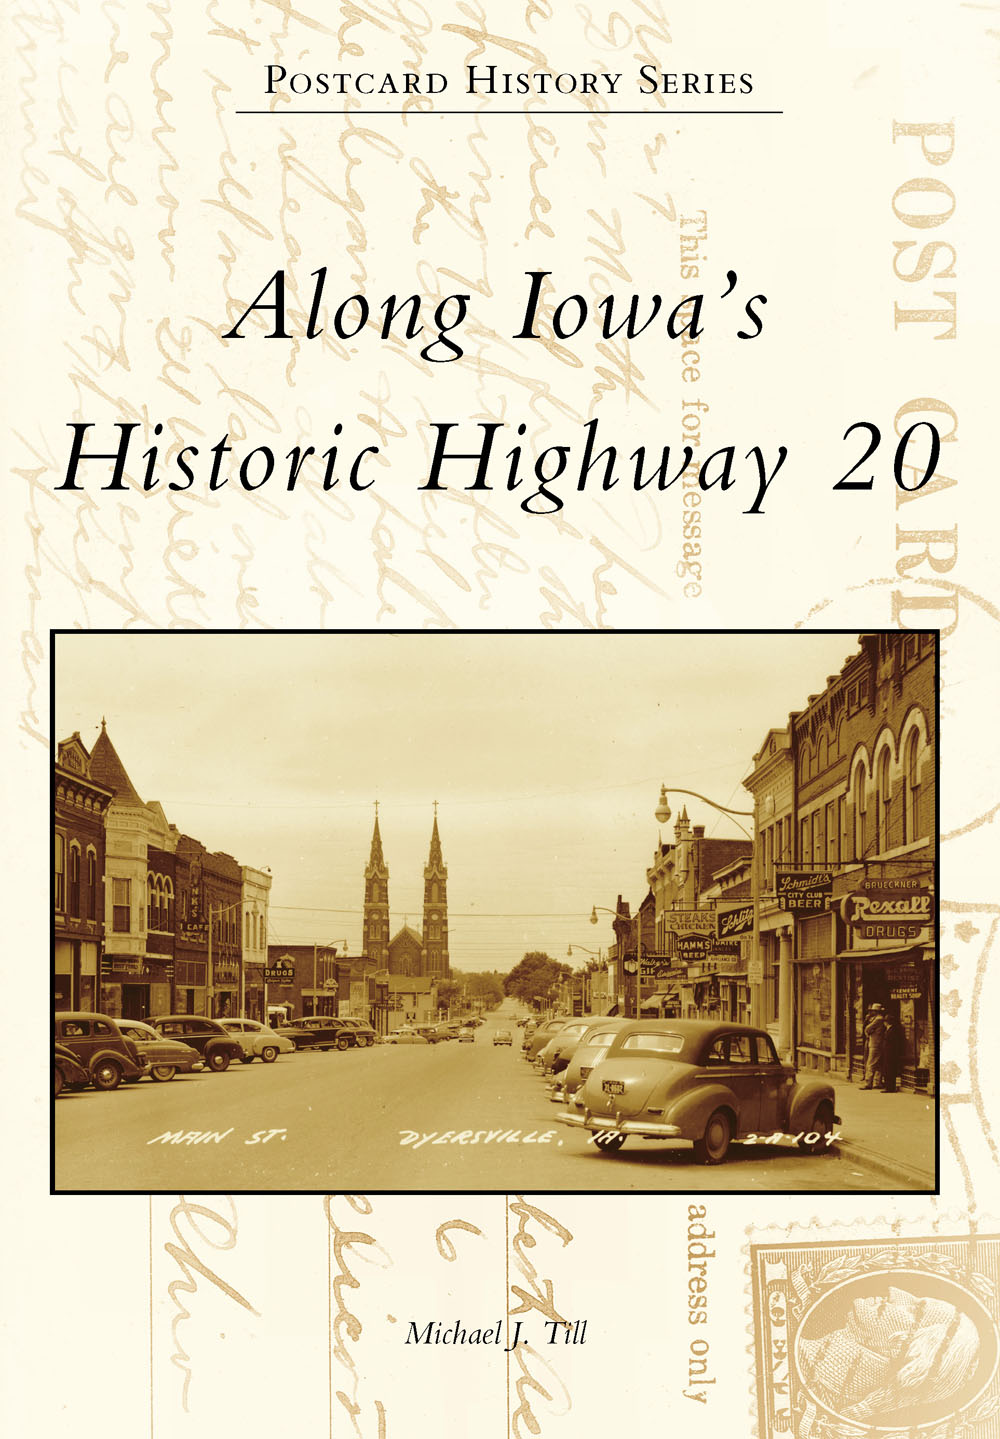 POSTCARD HISTORY SERIES Along Iowas Historic Highway 20 HISTORIC HIGHWAY - photo 1